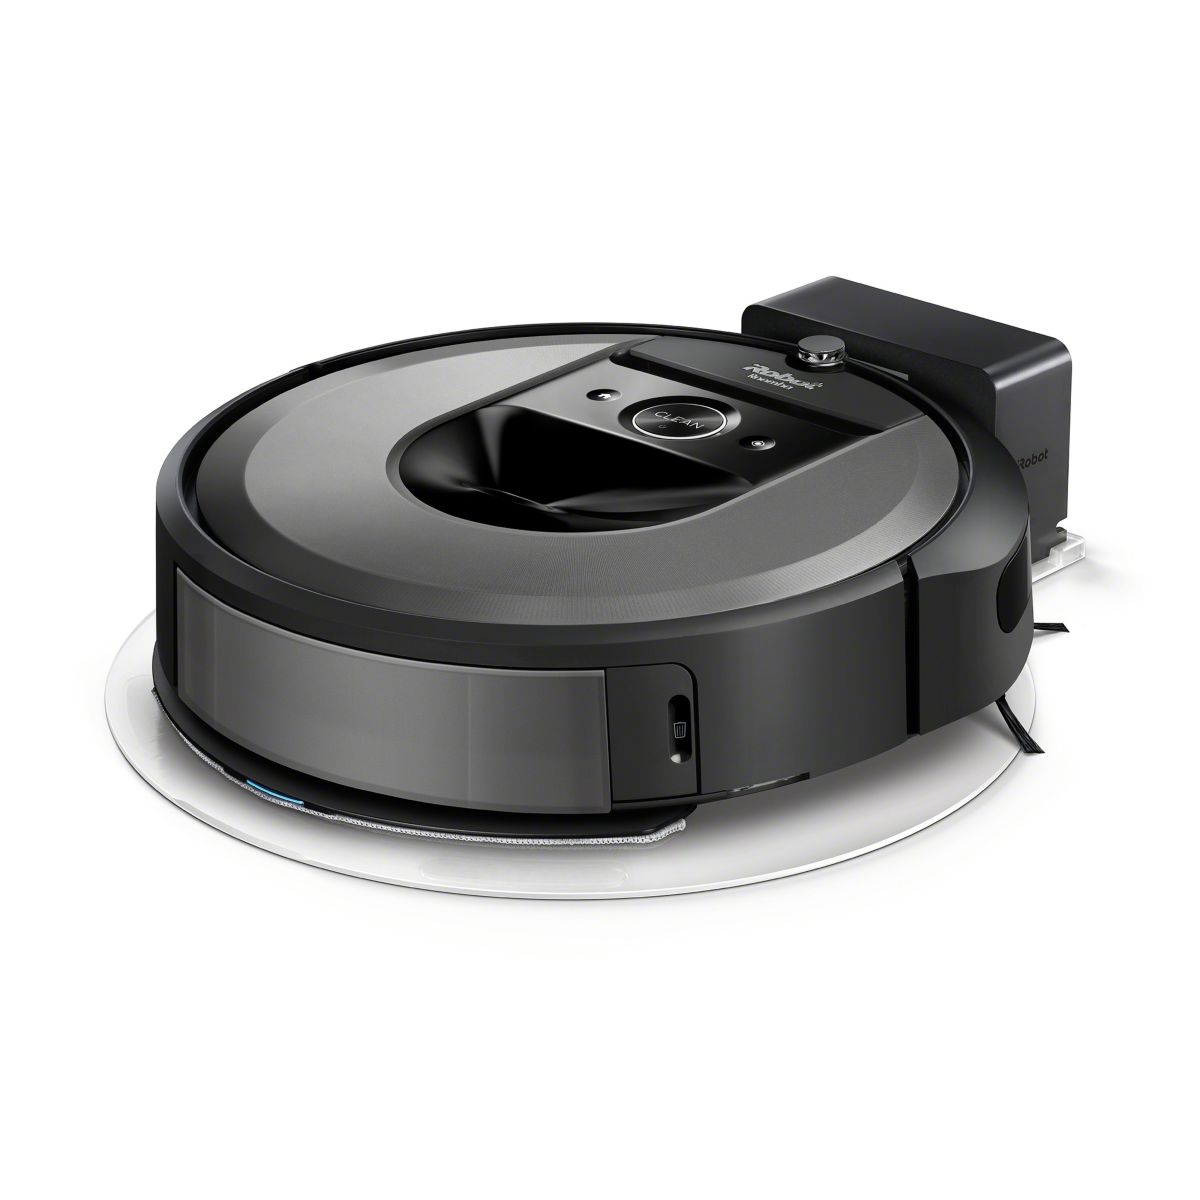 Robot aspirateur/laveur Roomba Combo Noir - IROBOT - R113840